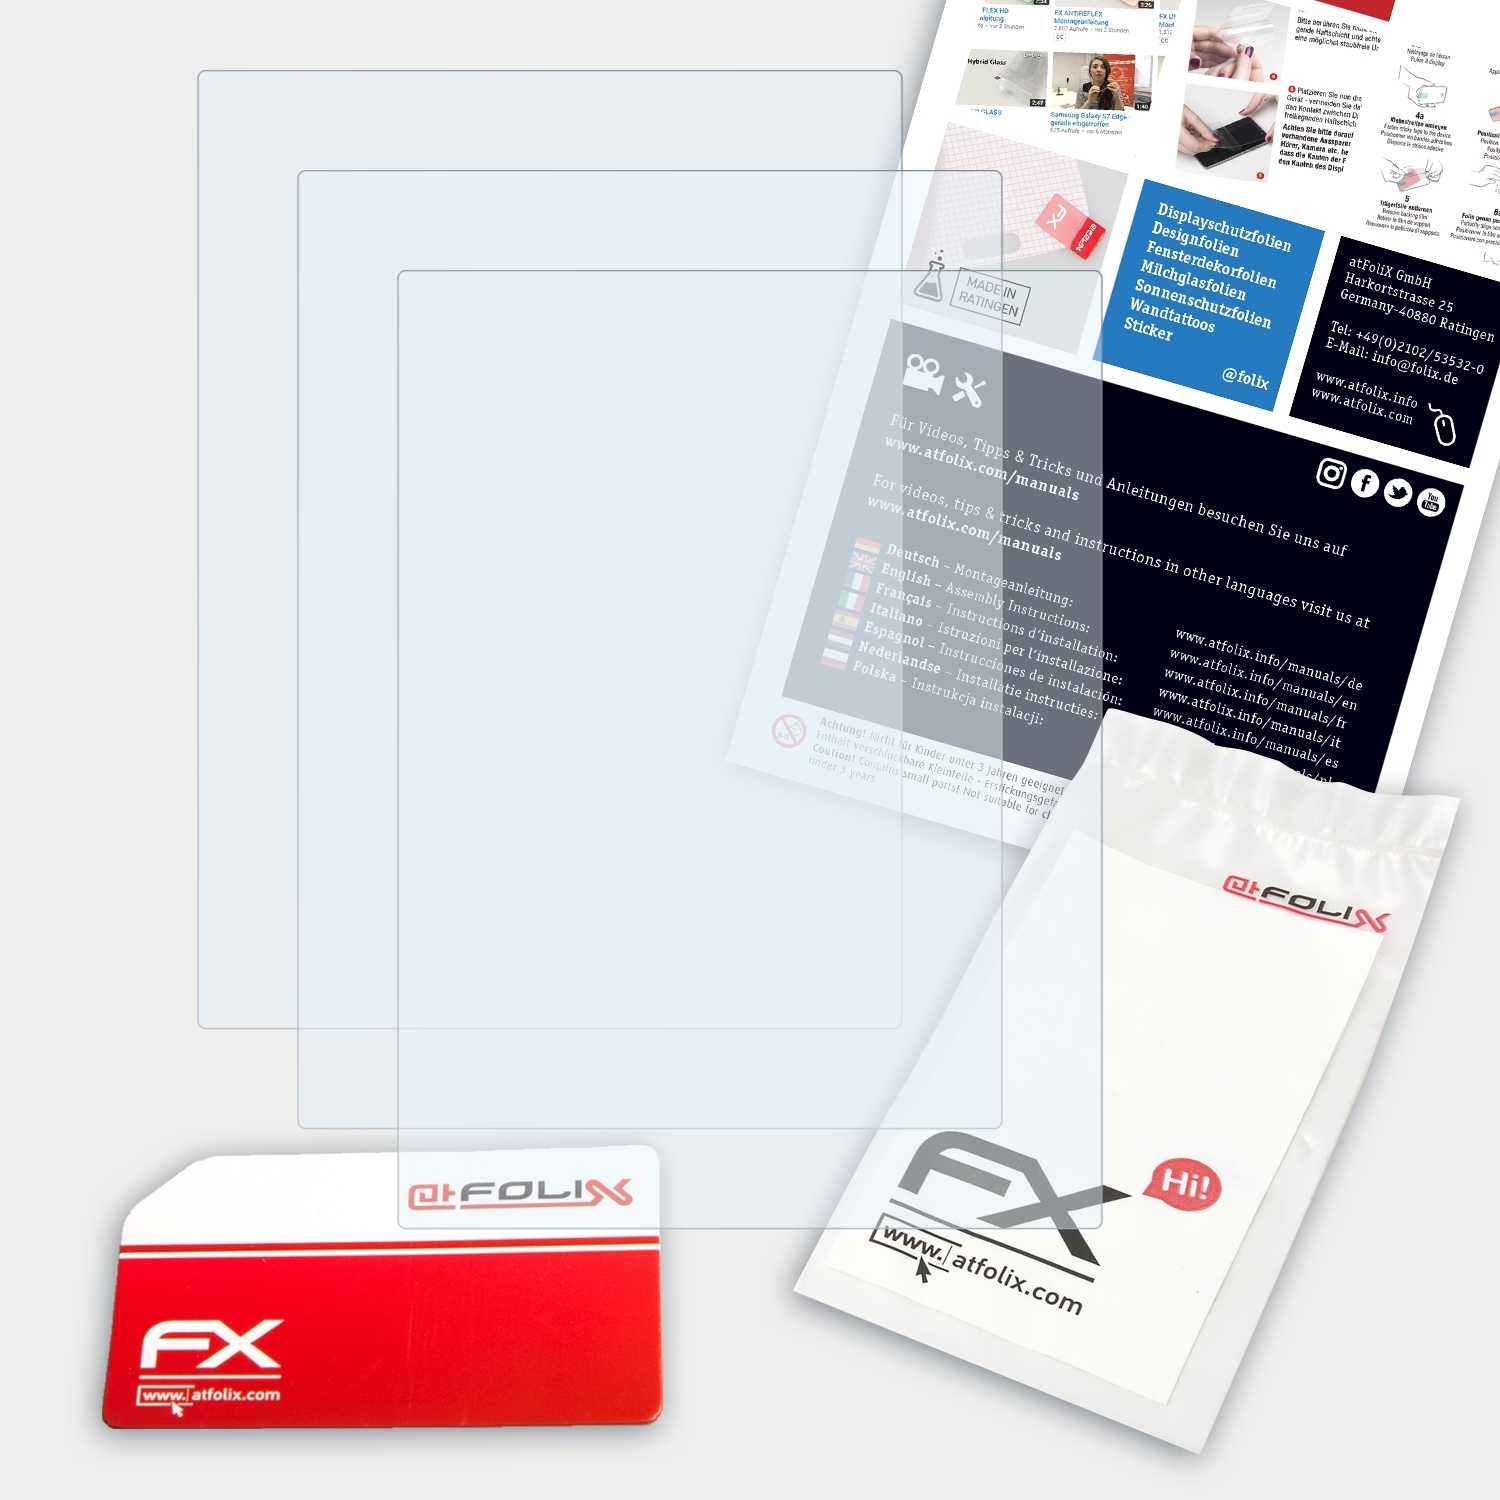 ATFOLIX 3x FX-Clear Displayschutz(für a7C) Sony Alpha